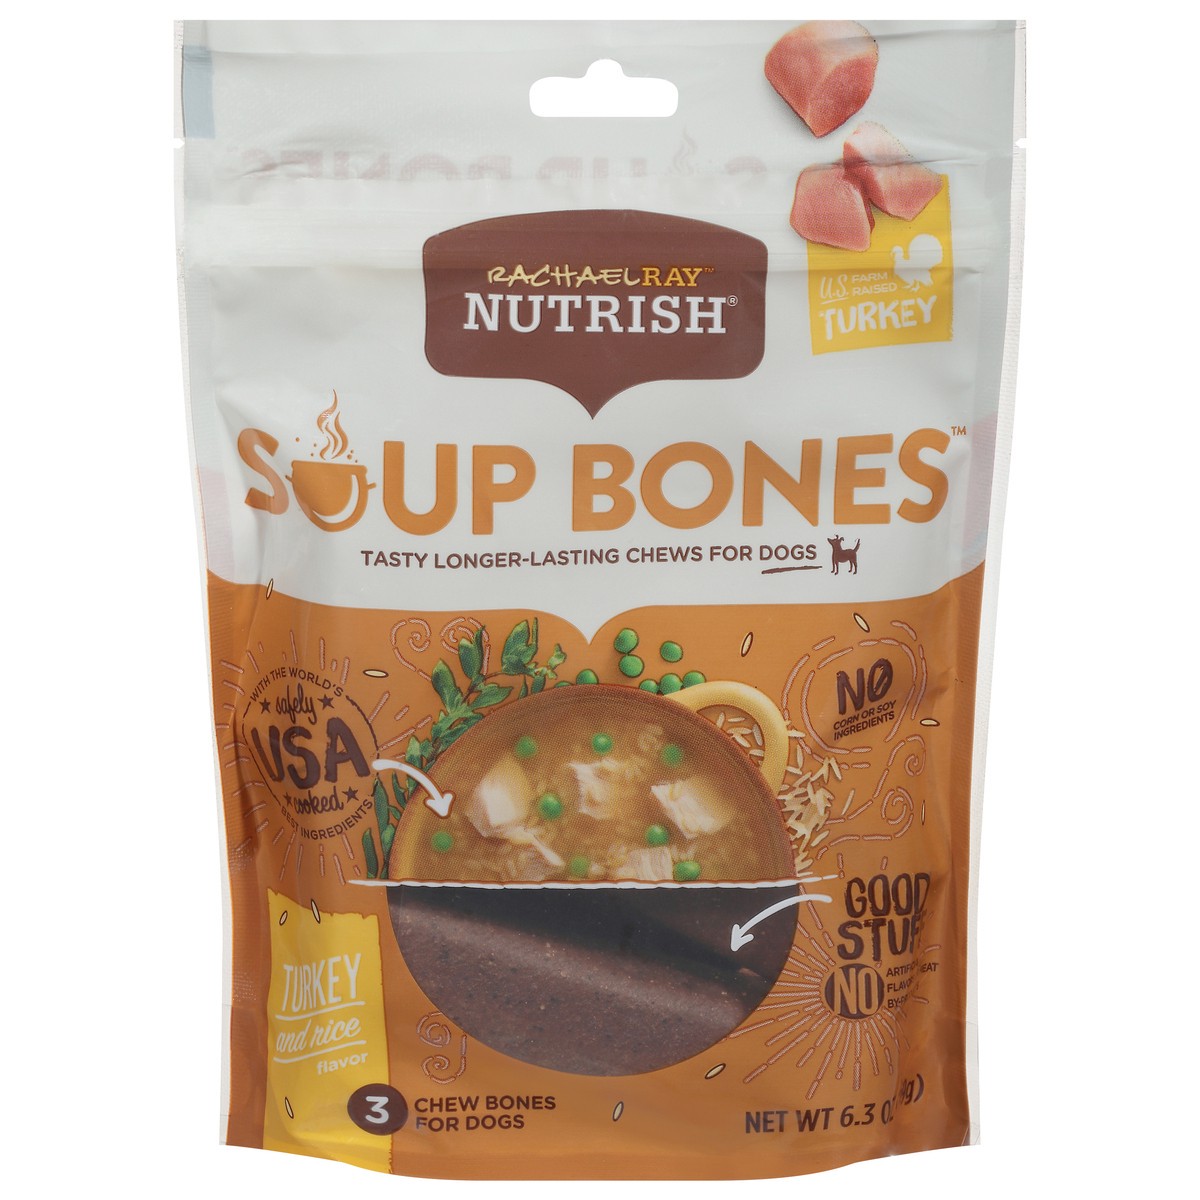 slide 1 of 9, Rachael Ray Nutrish Soup Bones With Real Turkey & Rice, 3 Dog Chews, 6.3 oz